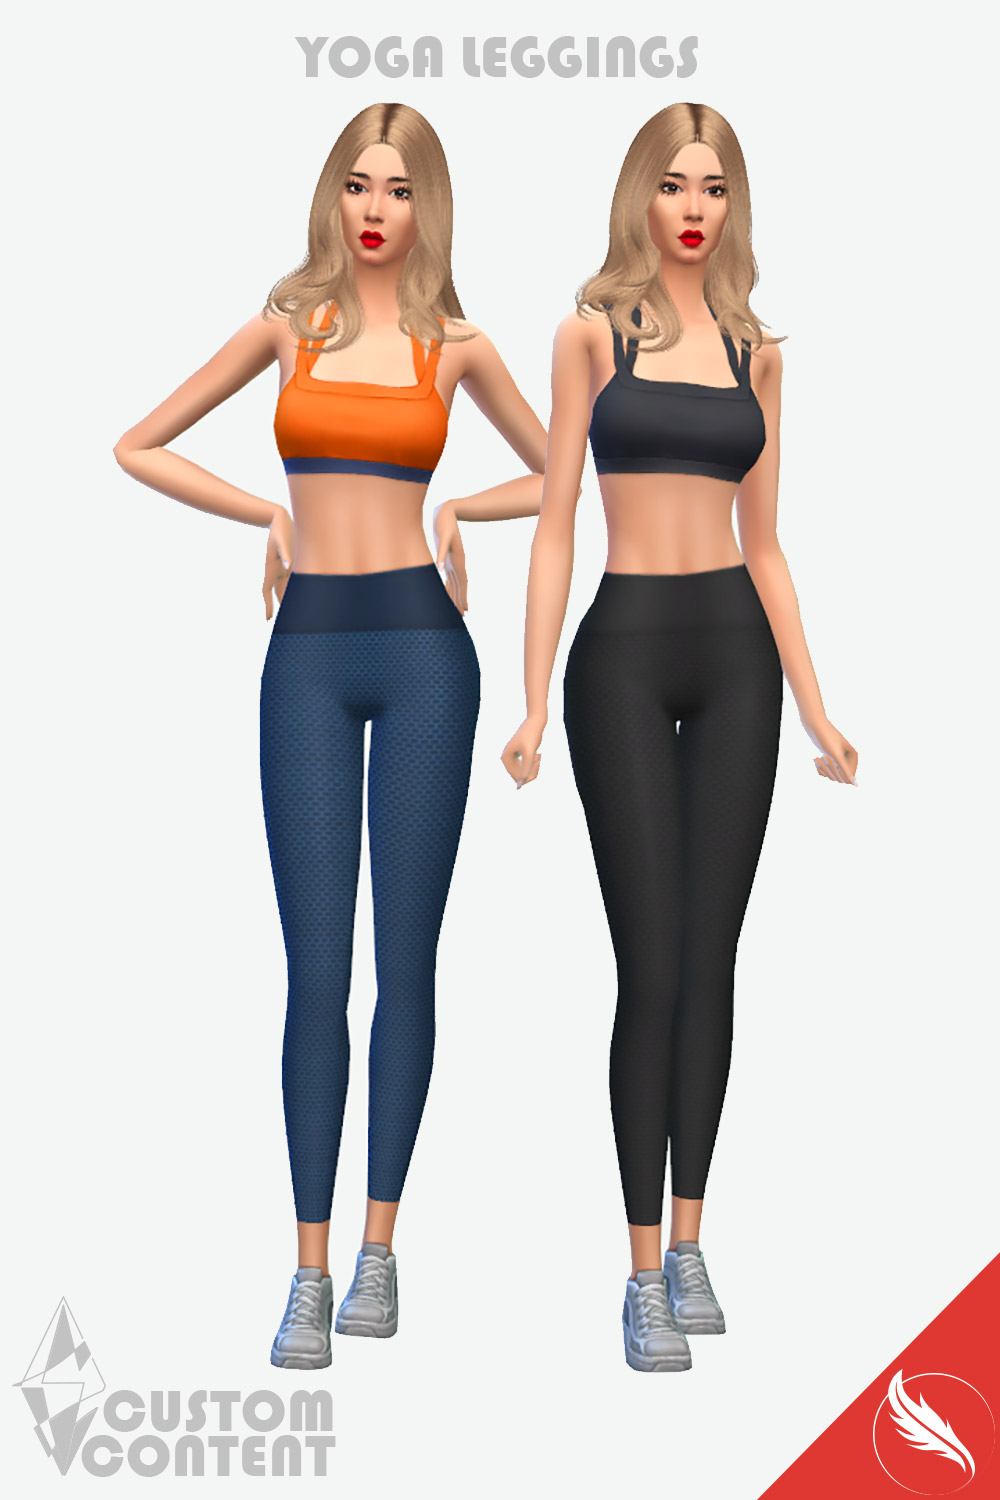 The Sims 4 Yoga Leggings CC